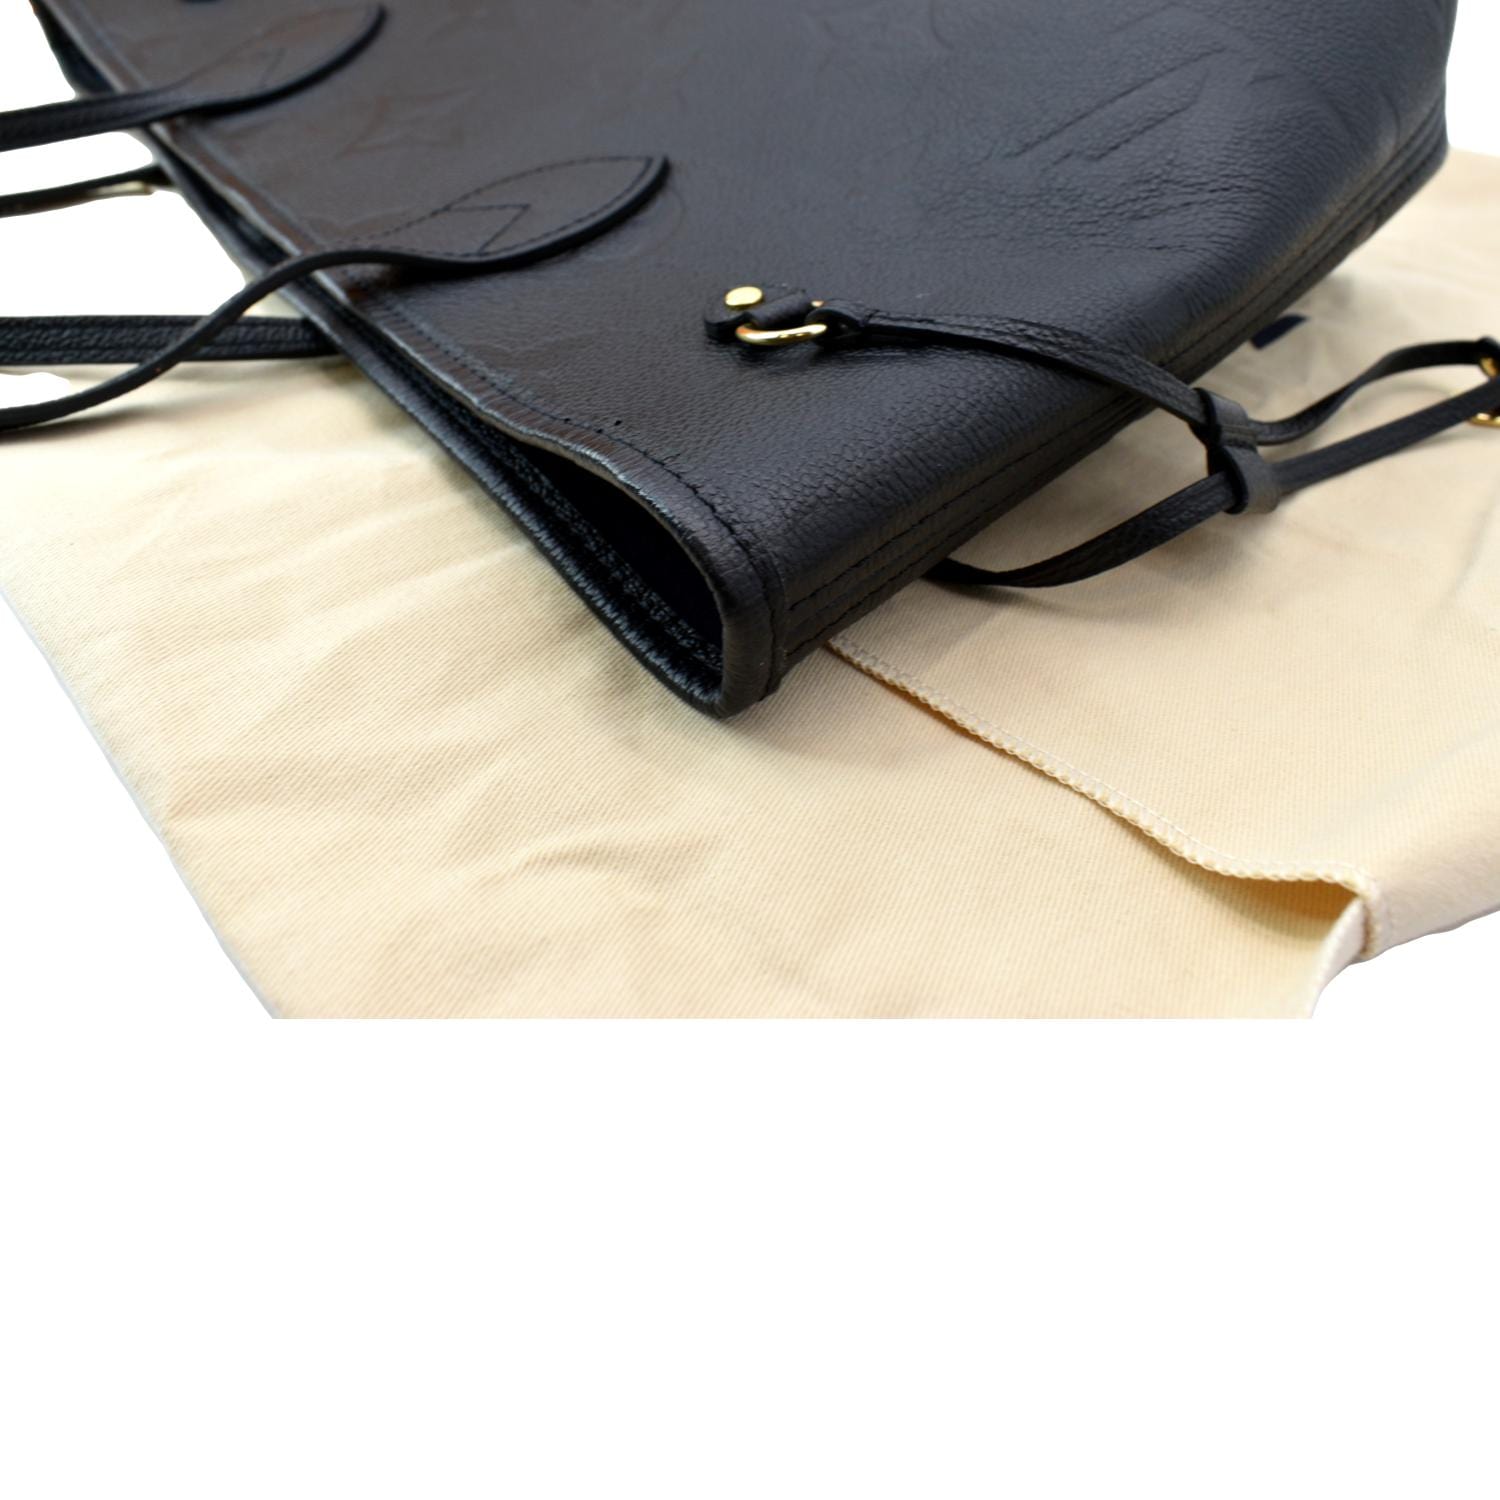 LOUIS VUITTON Handbag Neverfull MM Black by RenderingArtLab